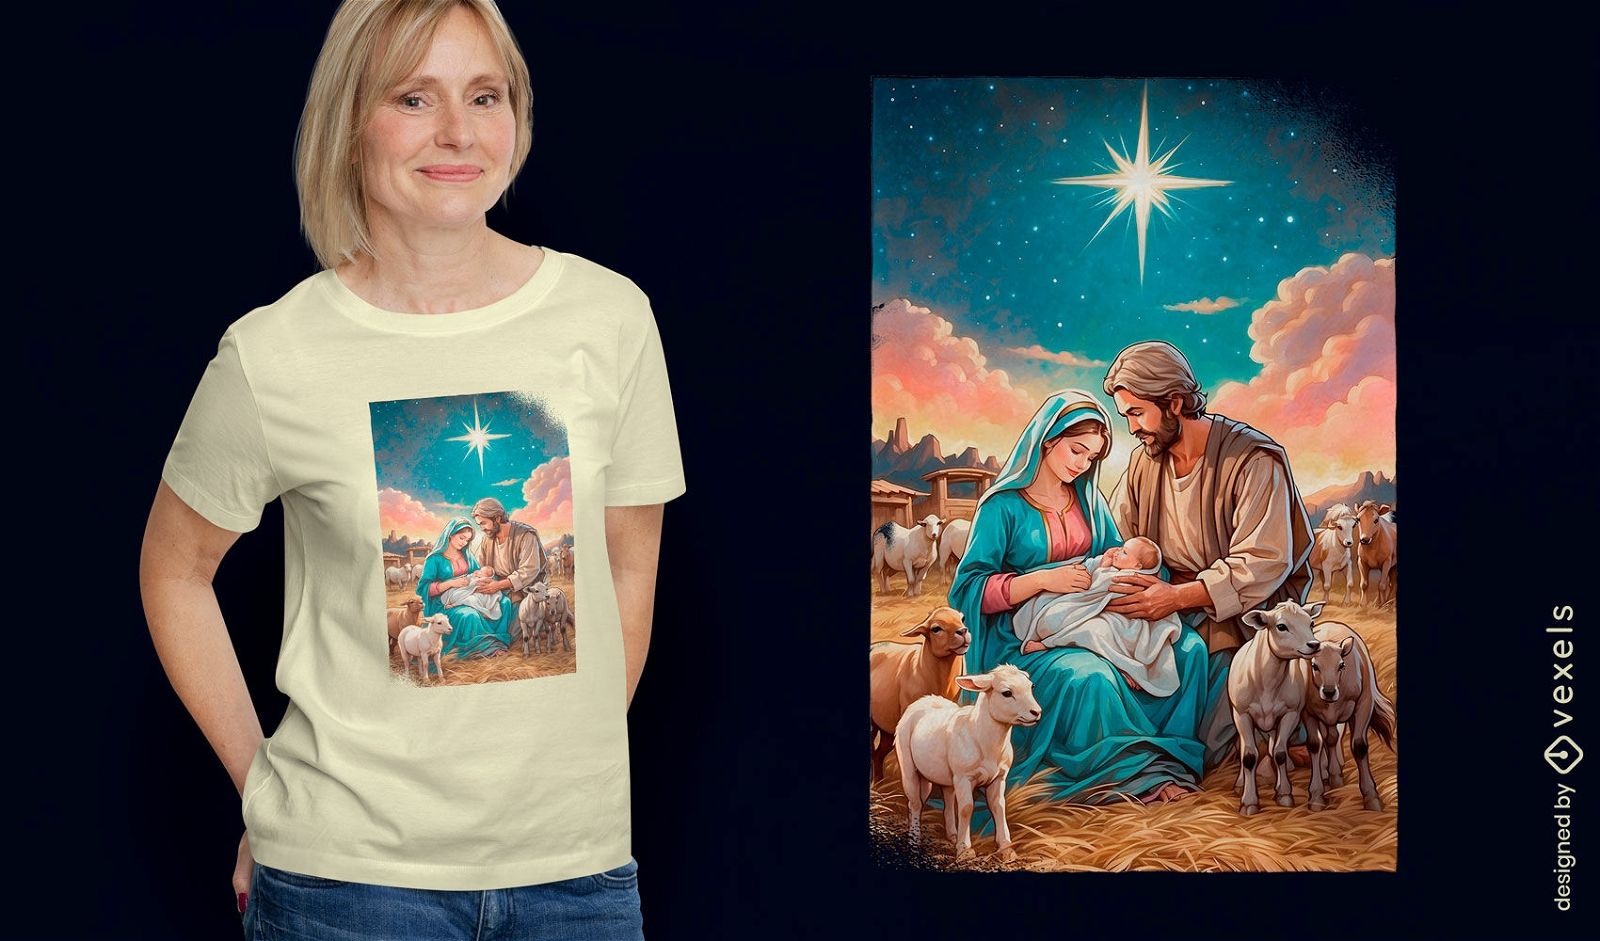 Diseño de camiseta de belén religioso.